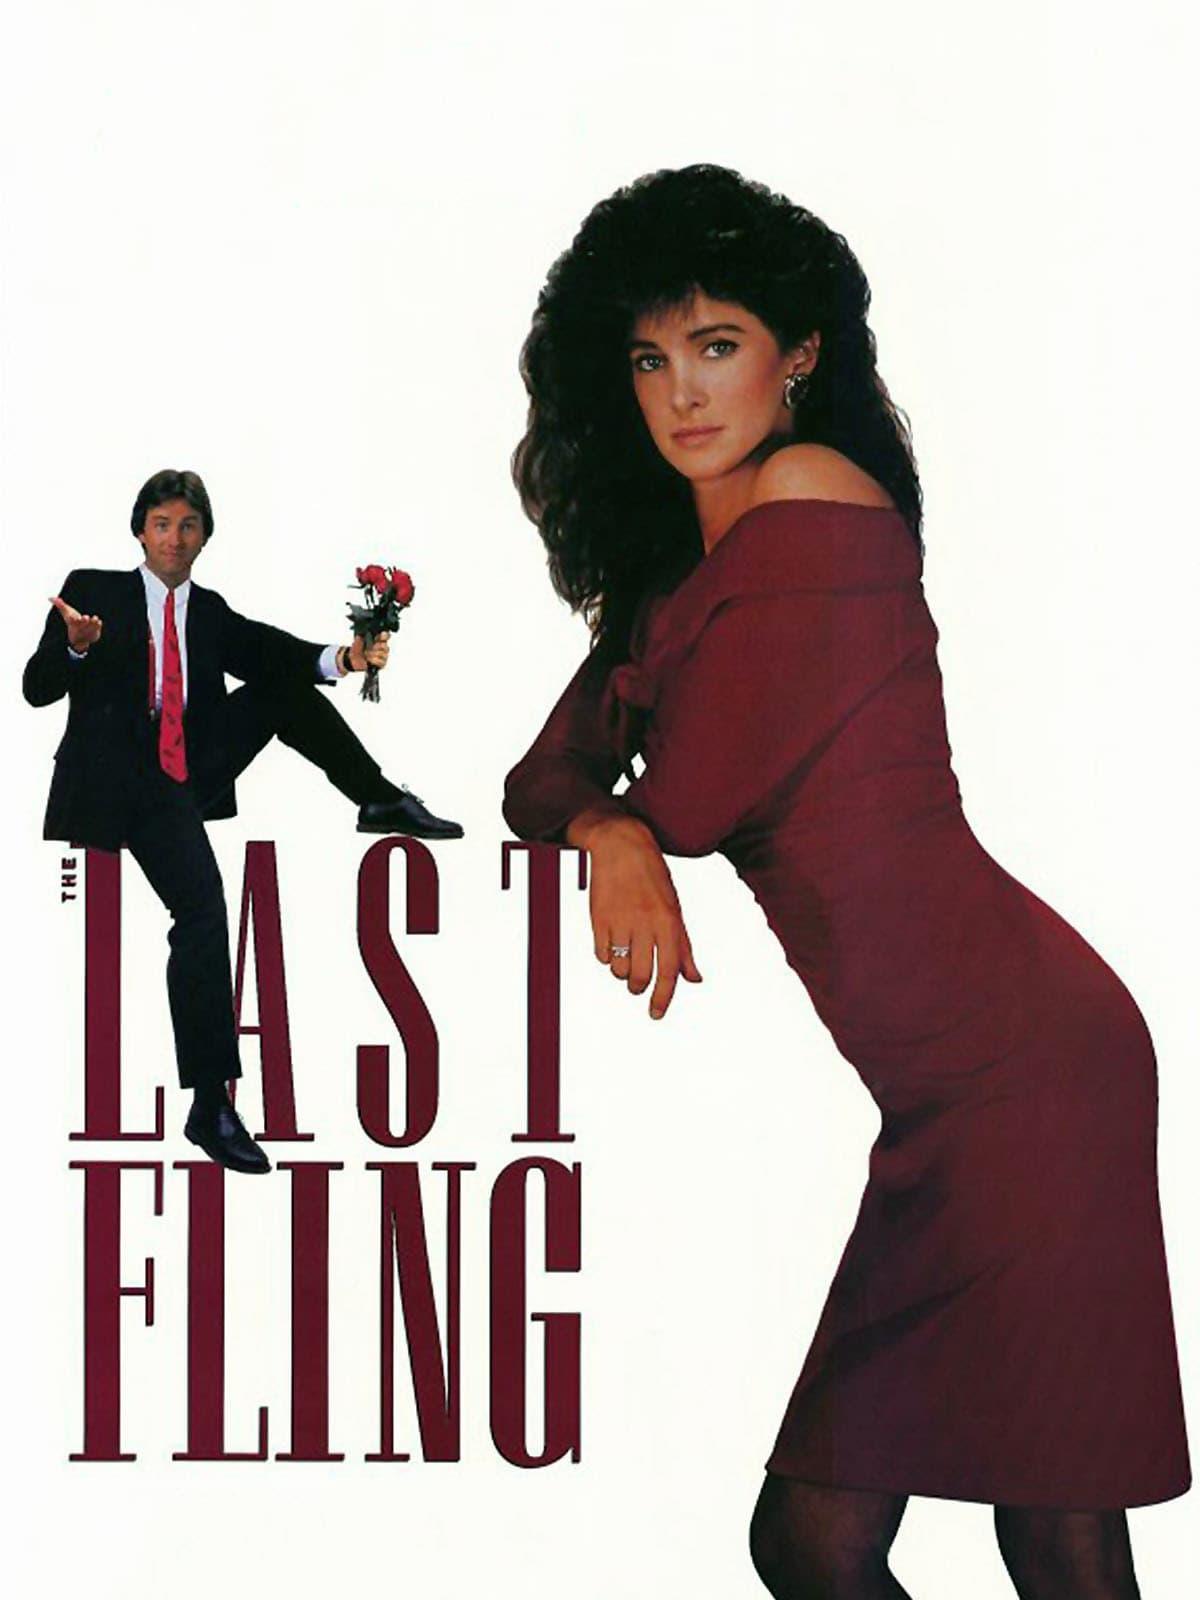 The Last Fling poster